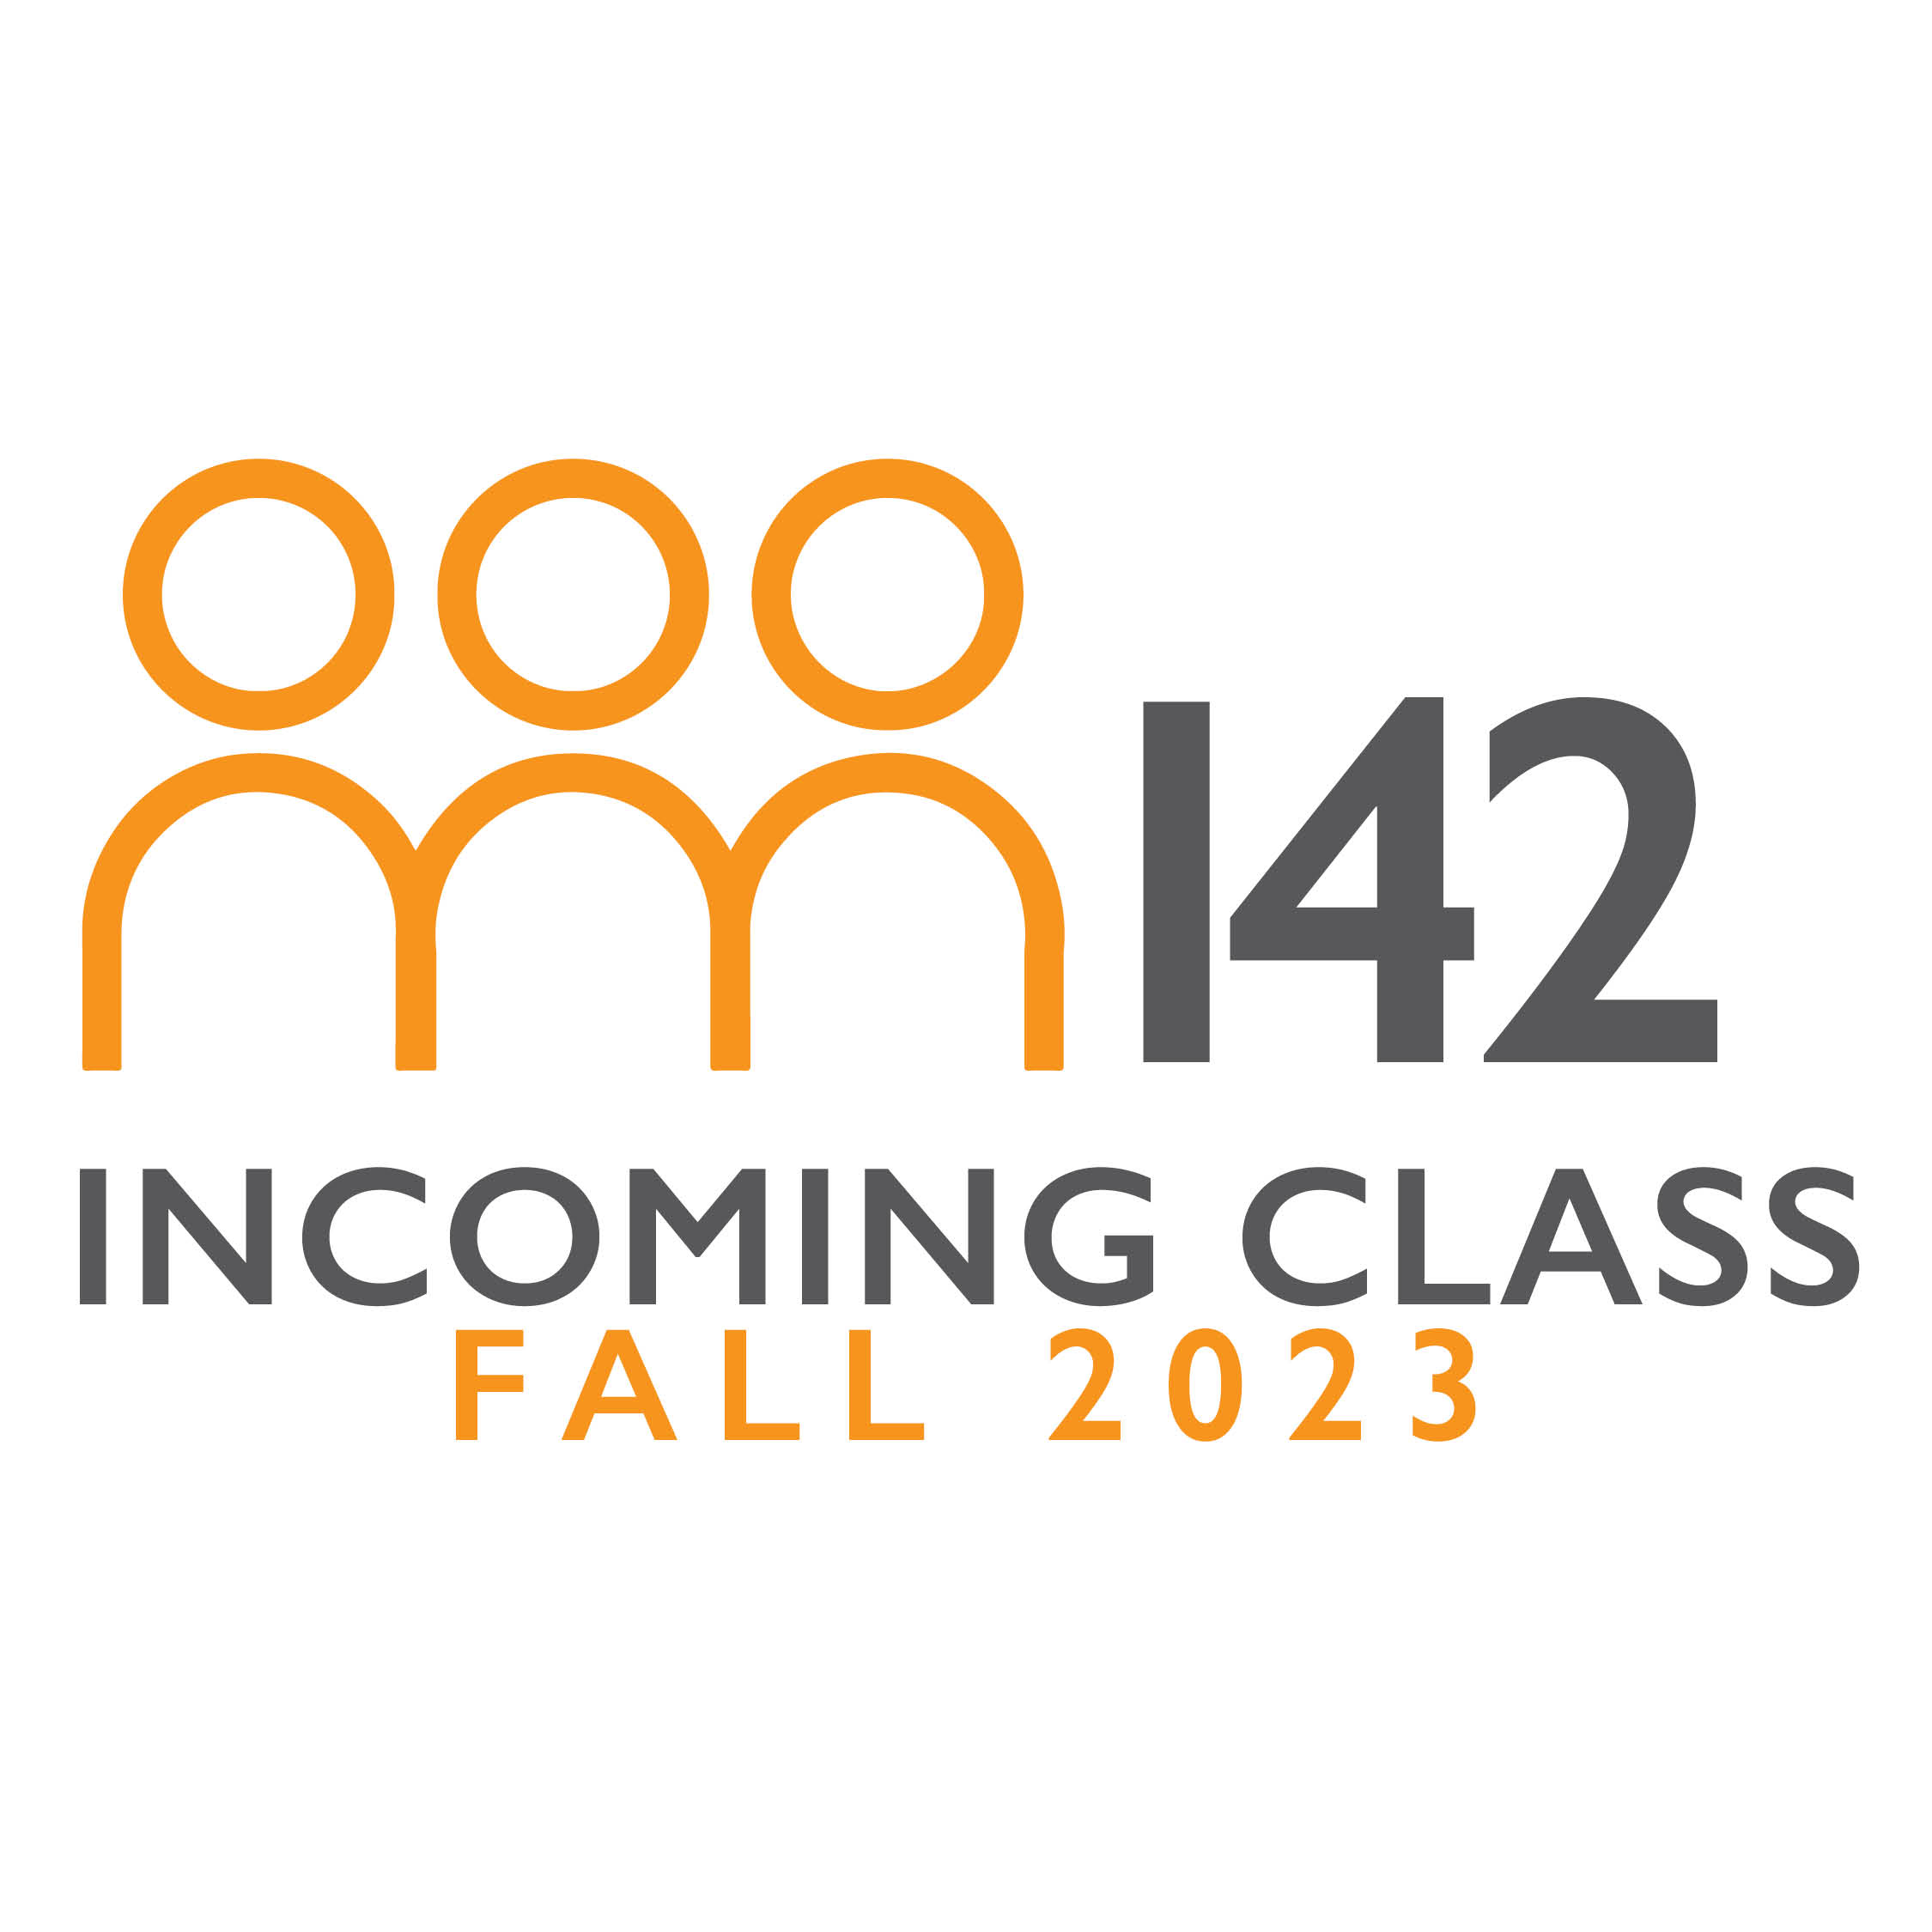 Incoming Class - Fall 2023